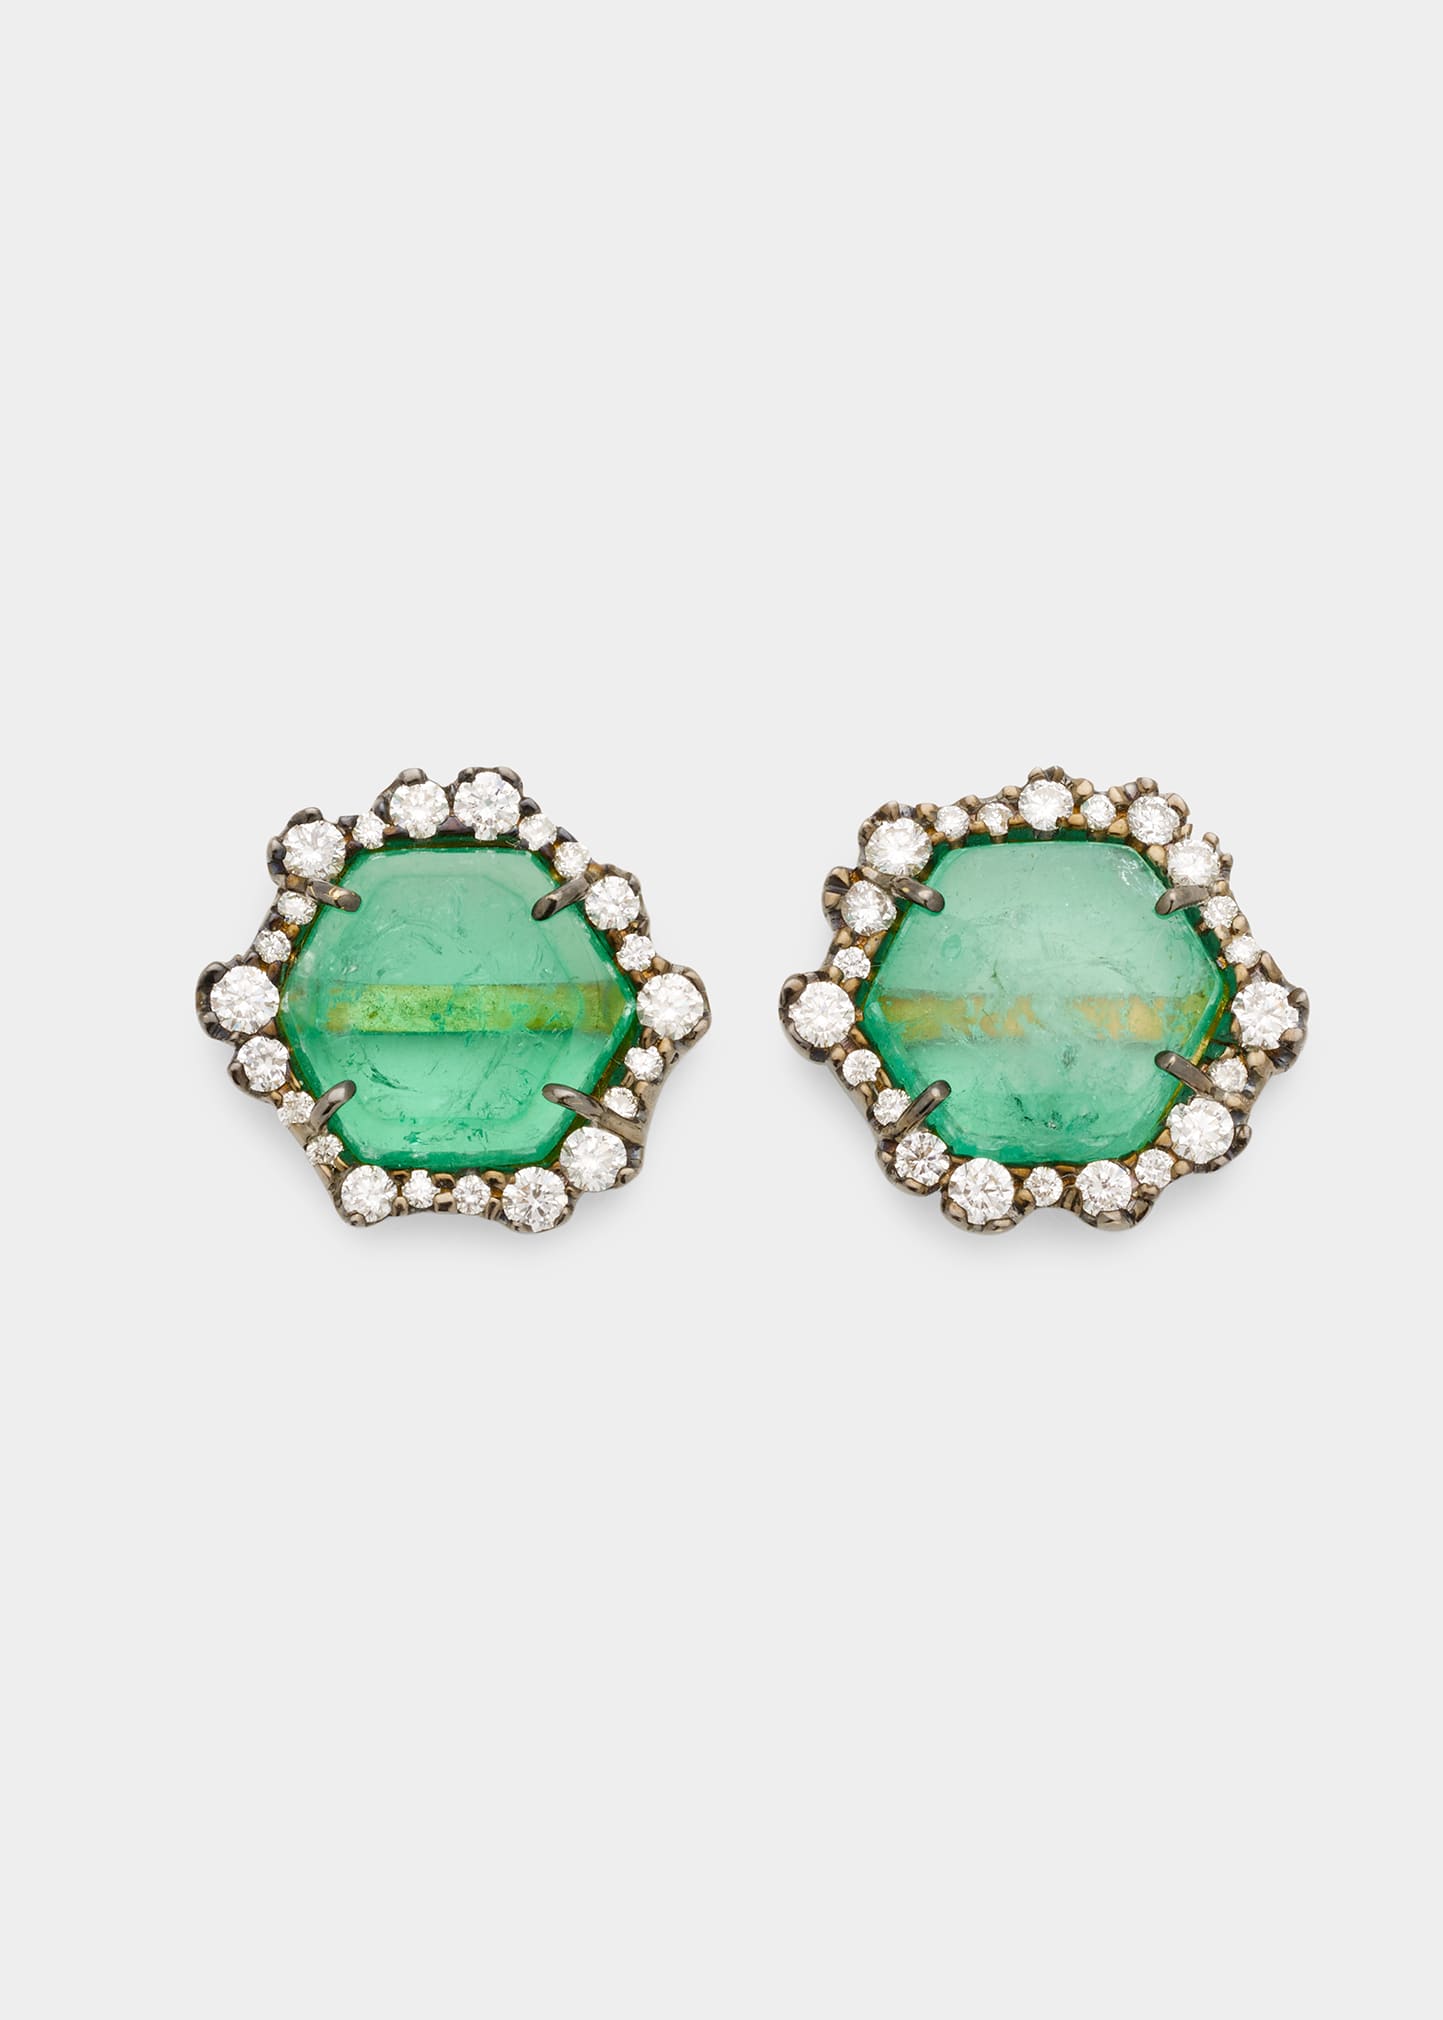 9.8 ct. Muzo Colombian Emerald Stud Earrings With 1.16 ct. Signature Irregular Diamond Bezel In 18K White Gold With Black Rhodium